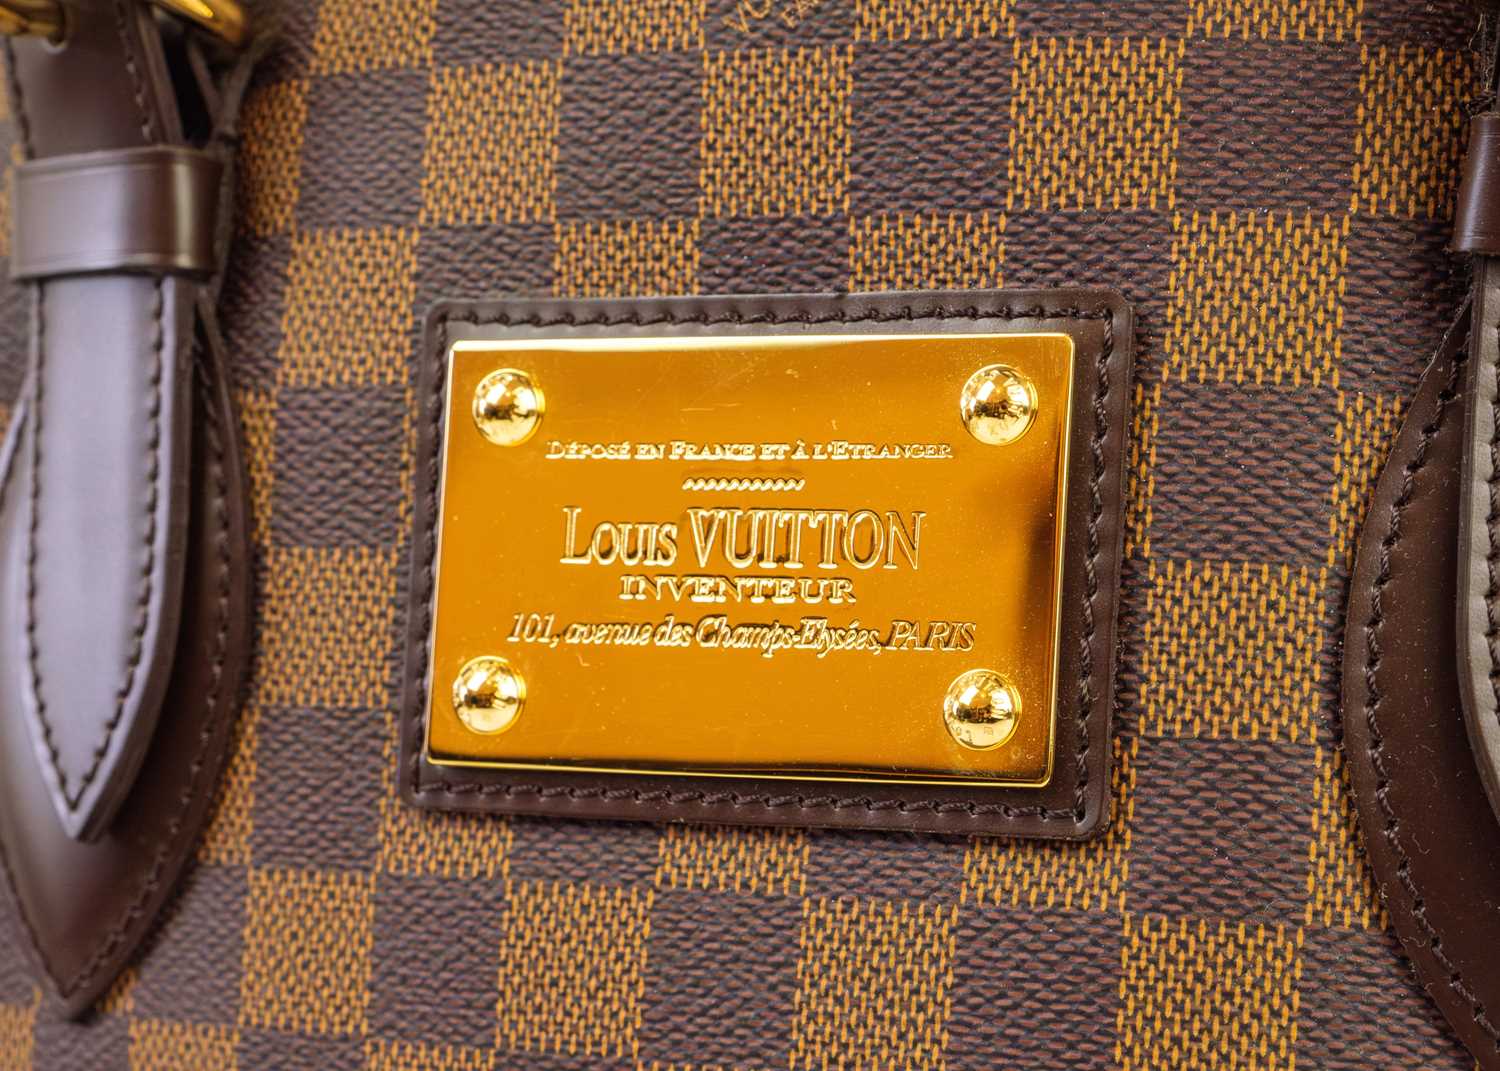 LOUIS VUITTON - A Damier Ebene Hampstead GM bag. - Image 5 of 5